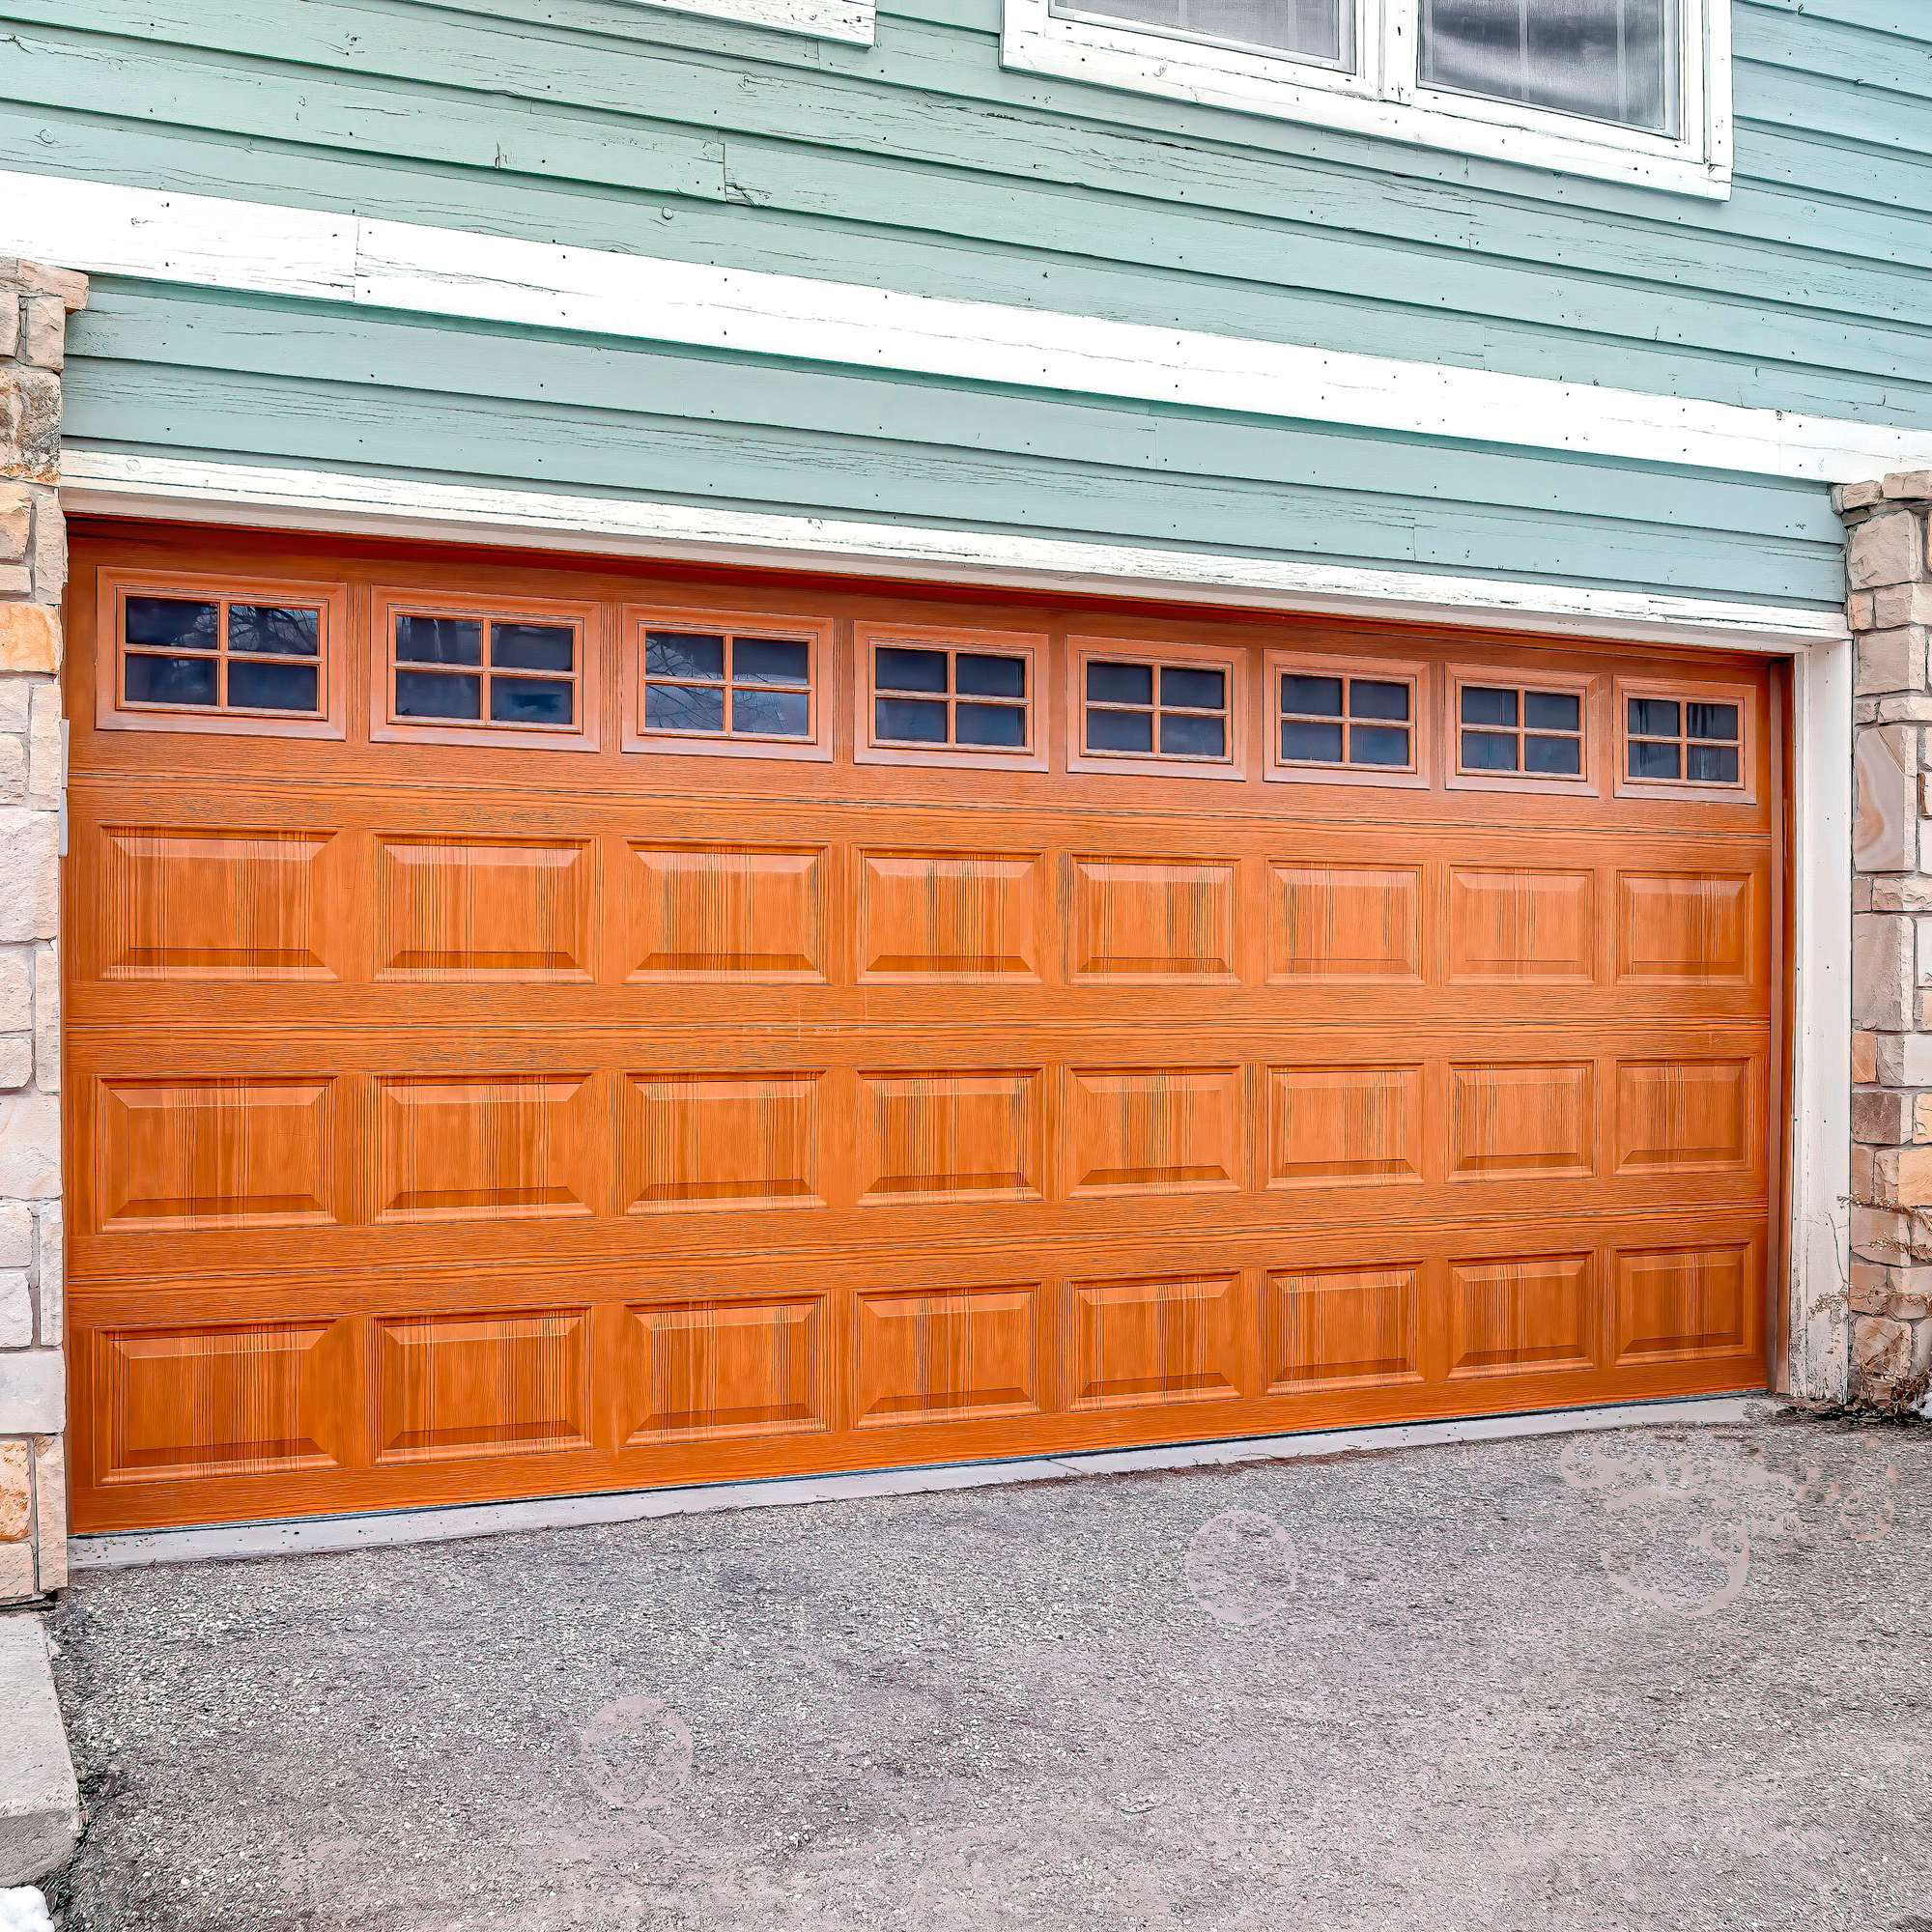 Nova garažna vrata so estetsko zelo pripomogla naši garaži